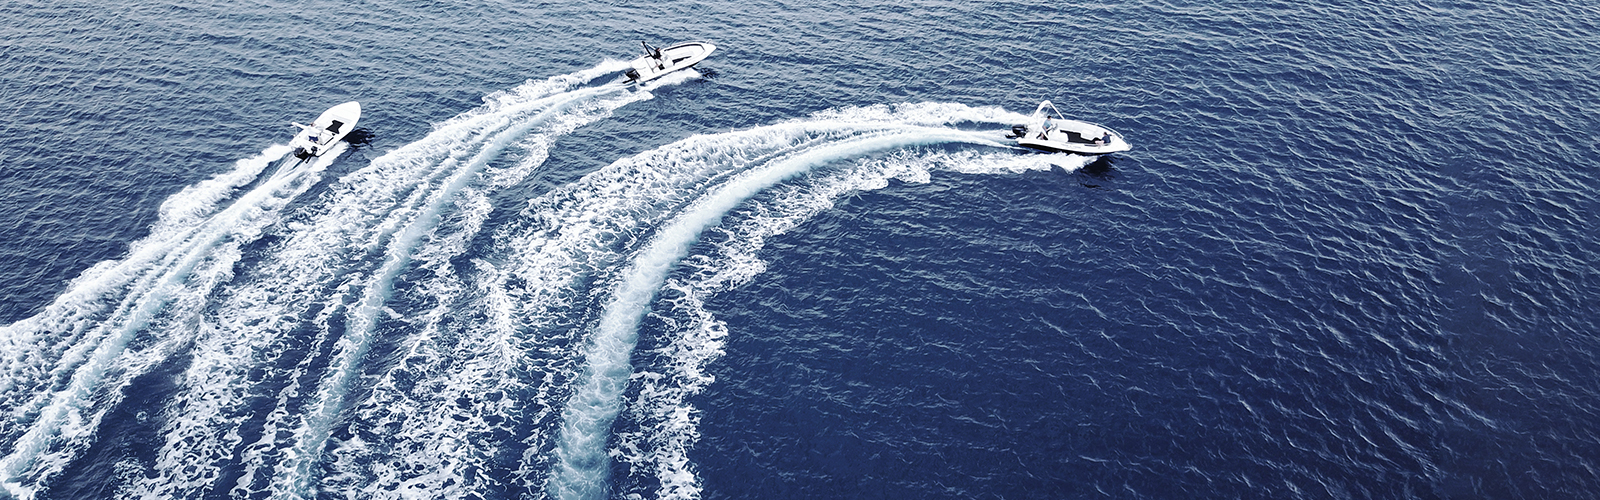 Three boats speeding in the open ocean